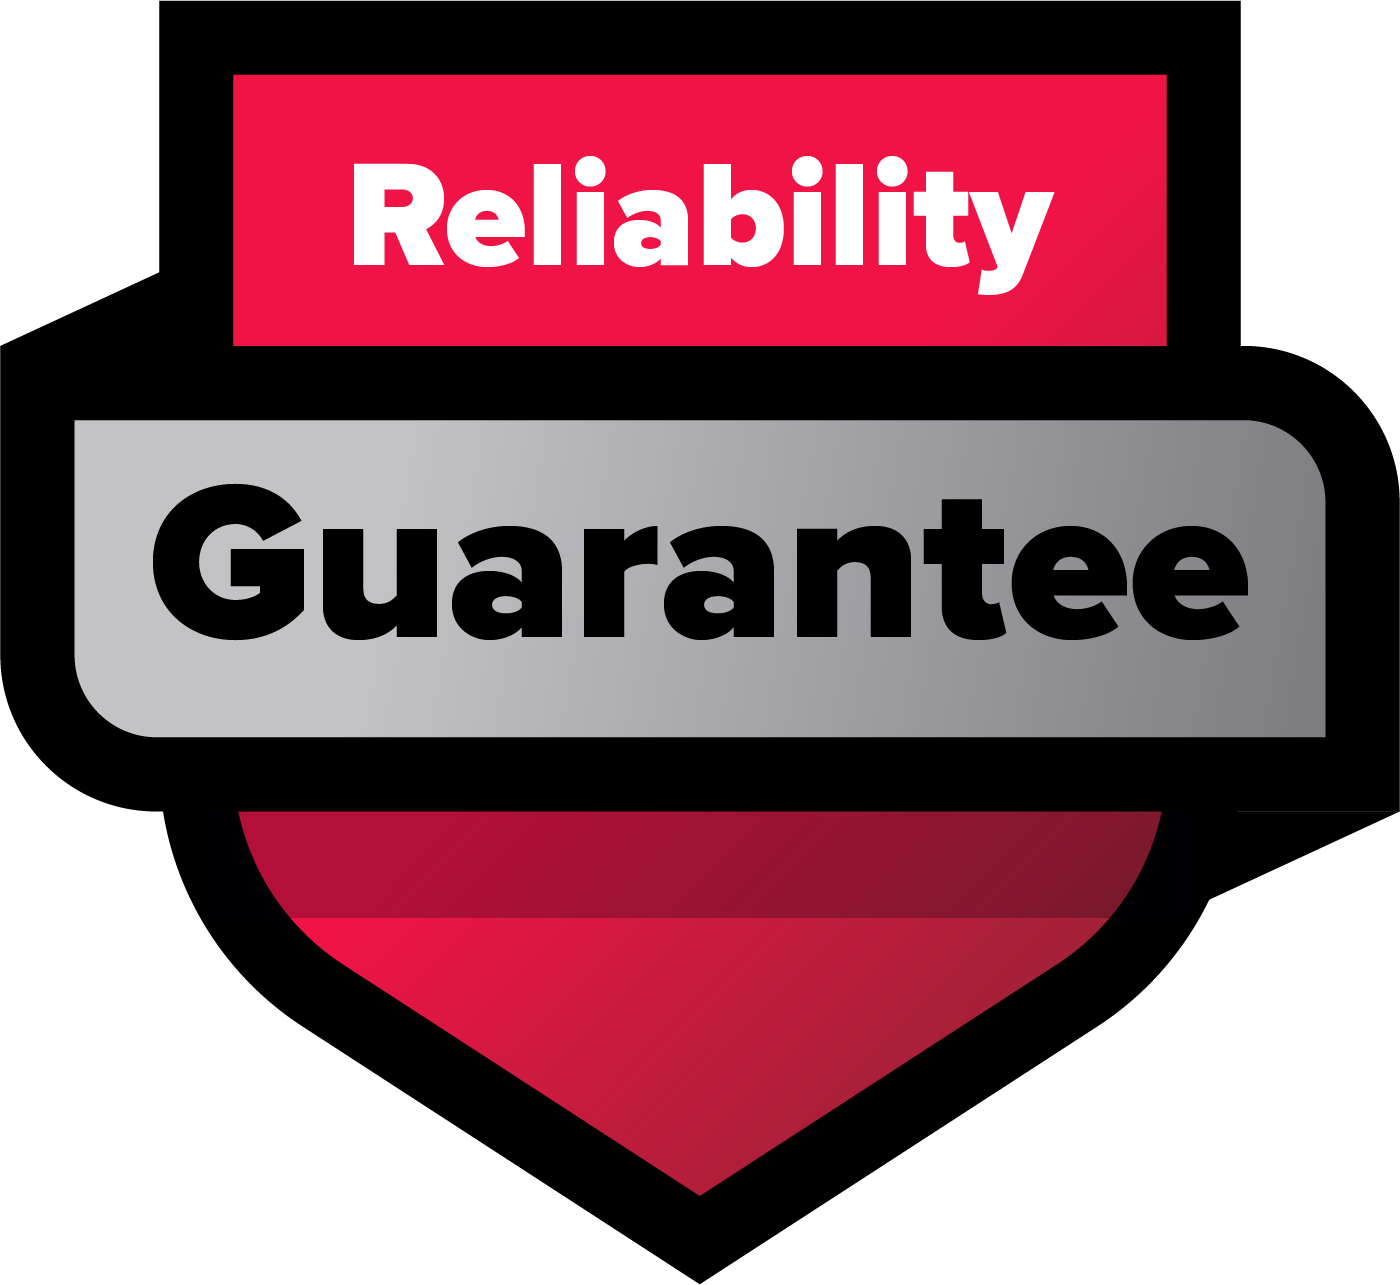 The DISH Reliability Guarantee